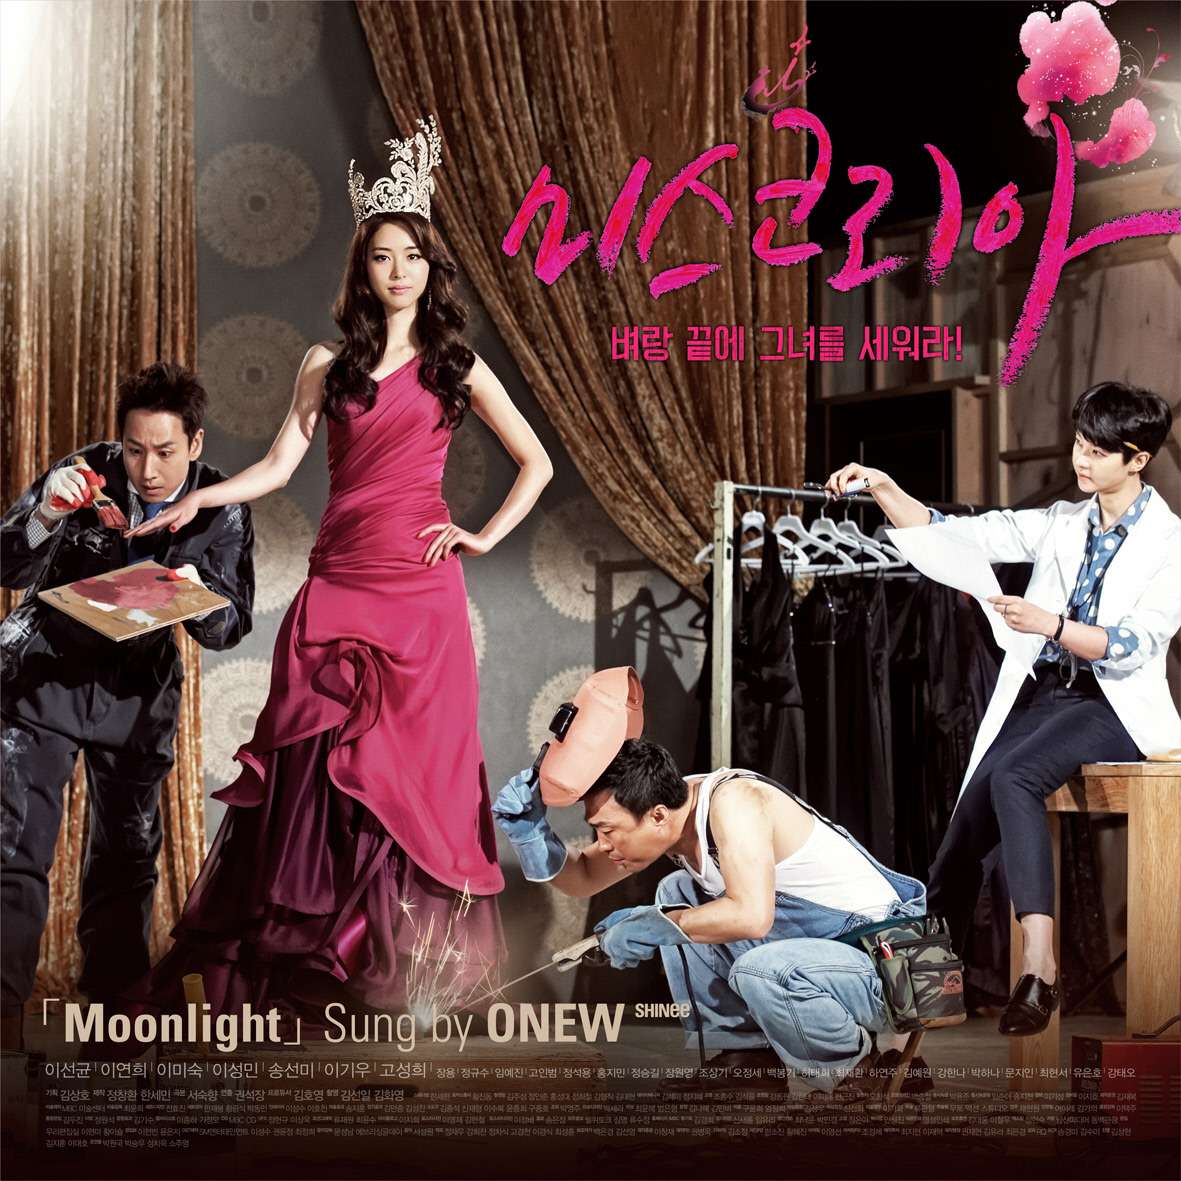 [Single] Onew (SHINee) - Moonlight (Miss Korea OST)